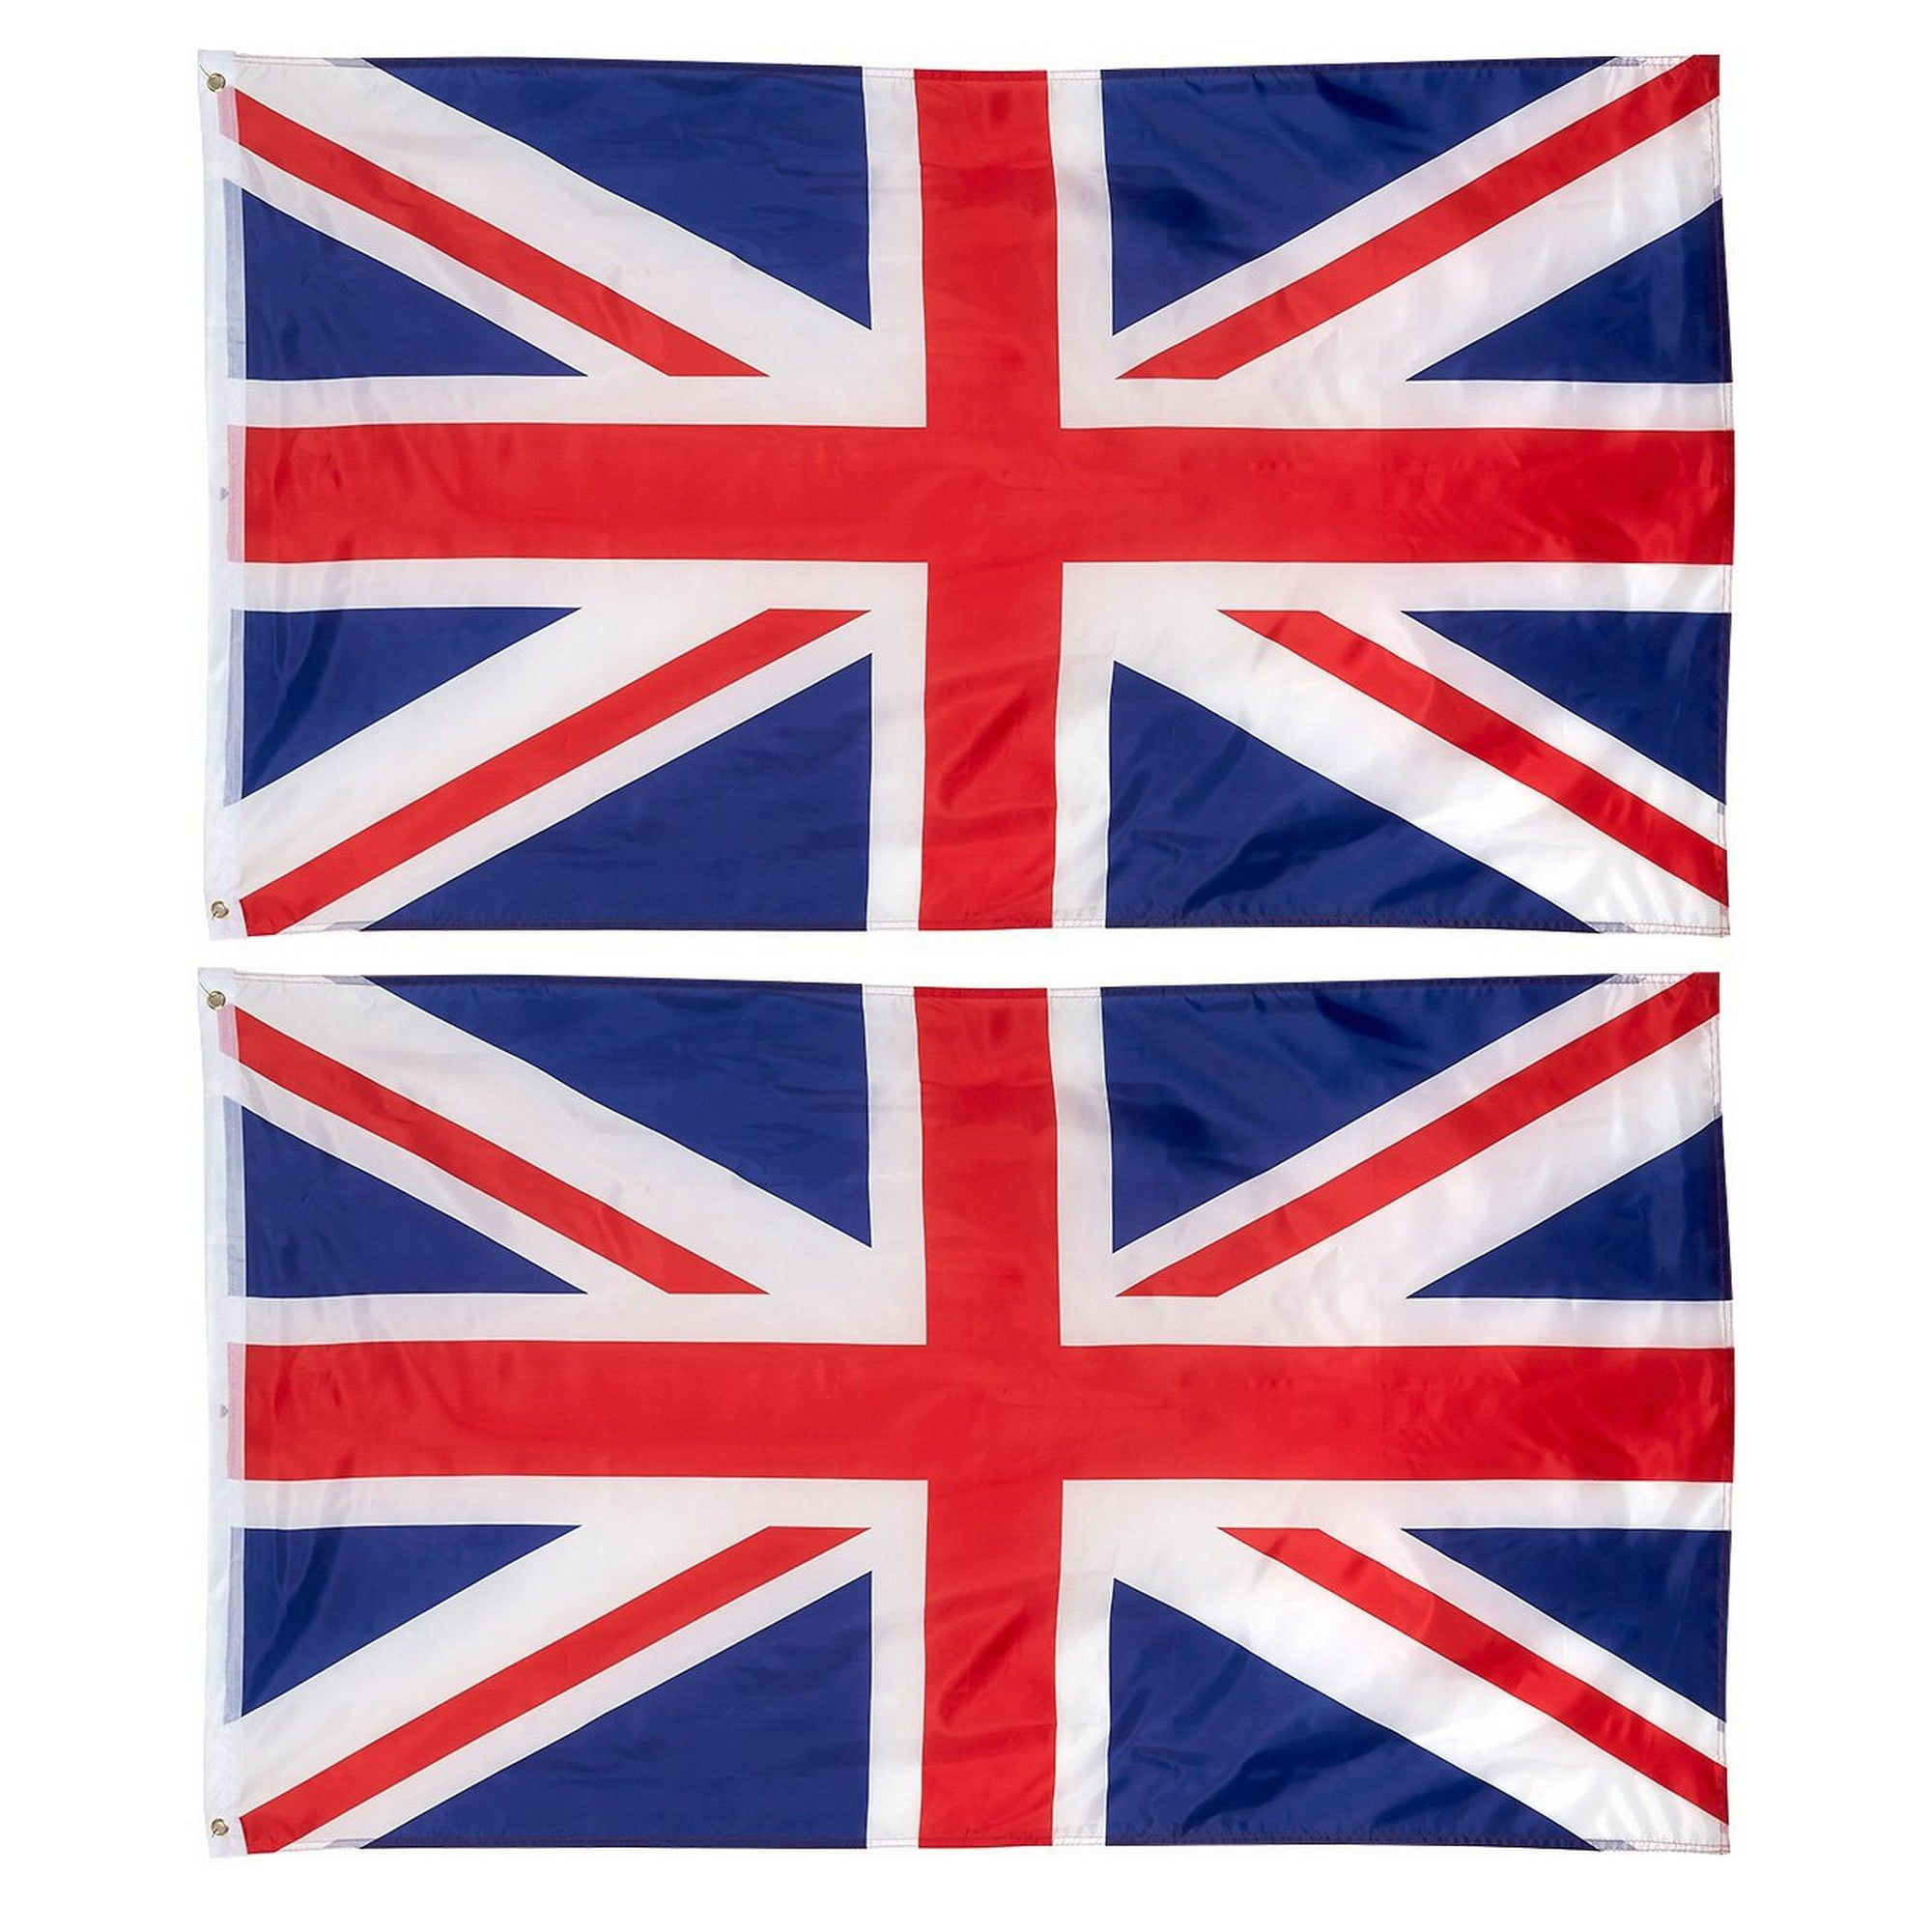 2-Piece Uk Flags - Outdoor 3X5 Feet United Kingdom Flags, British ...